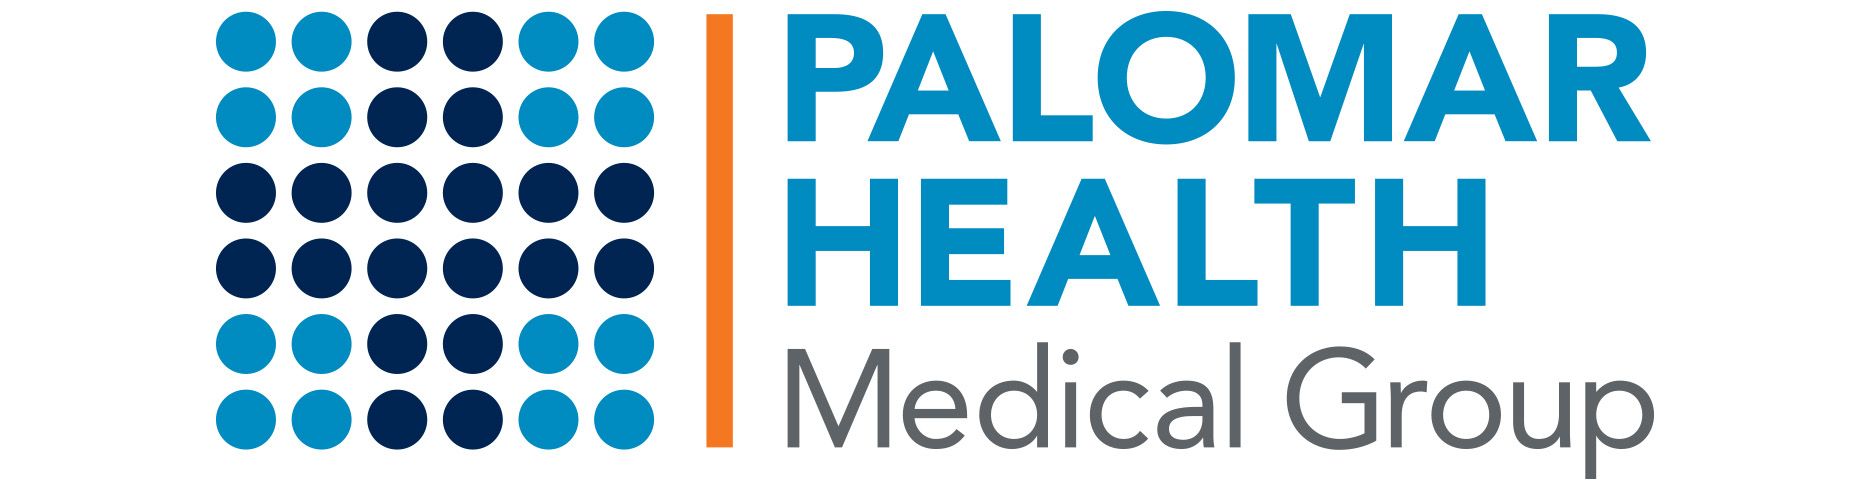 palomar health medical group